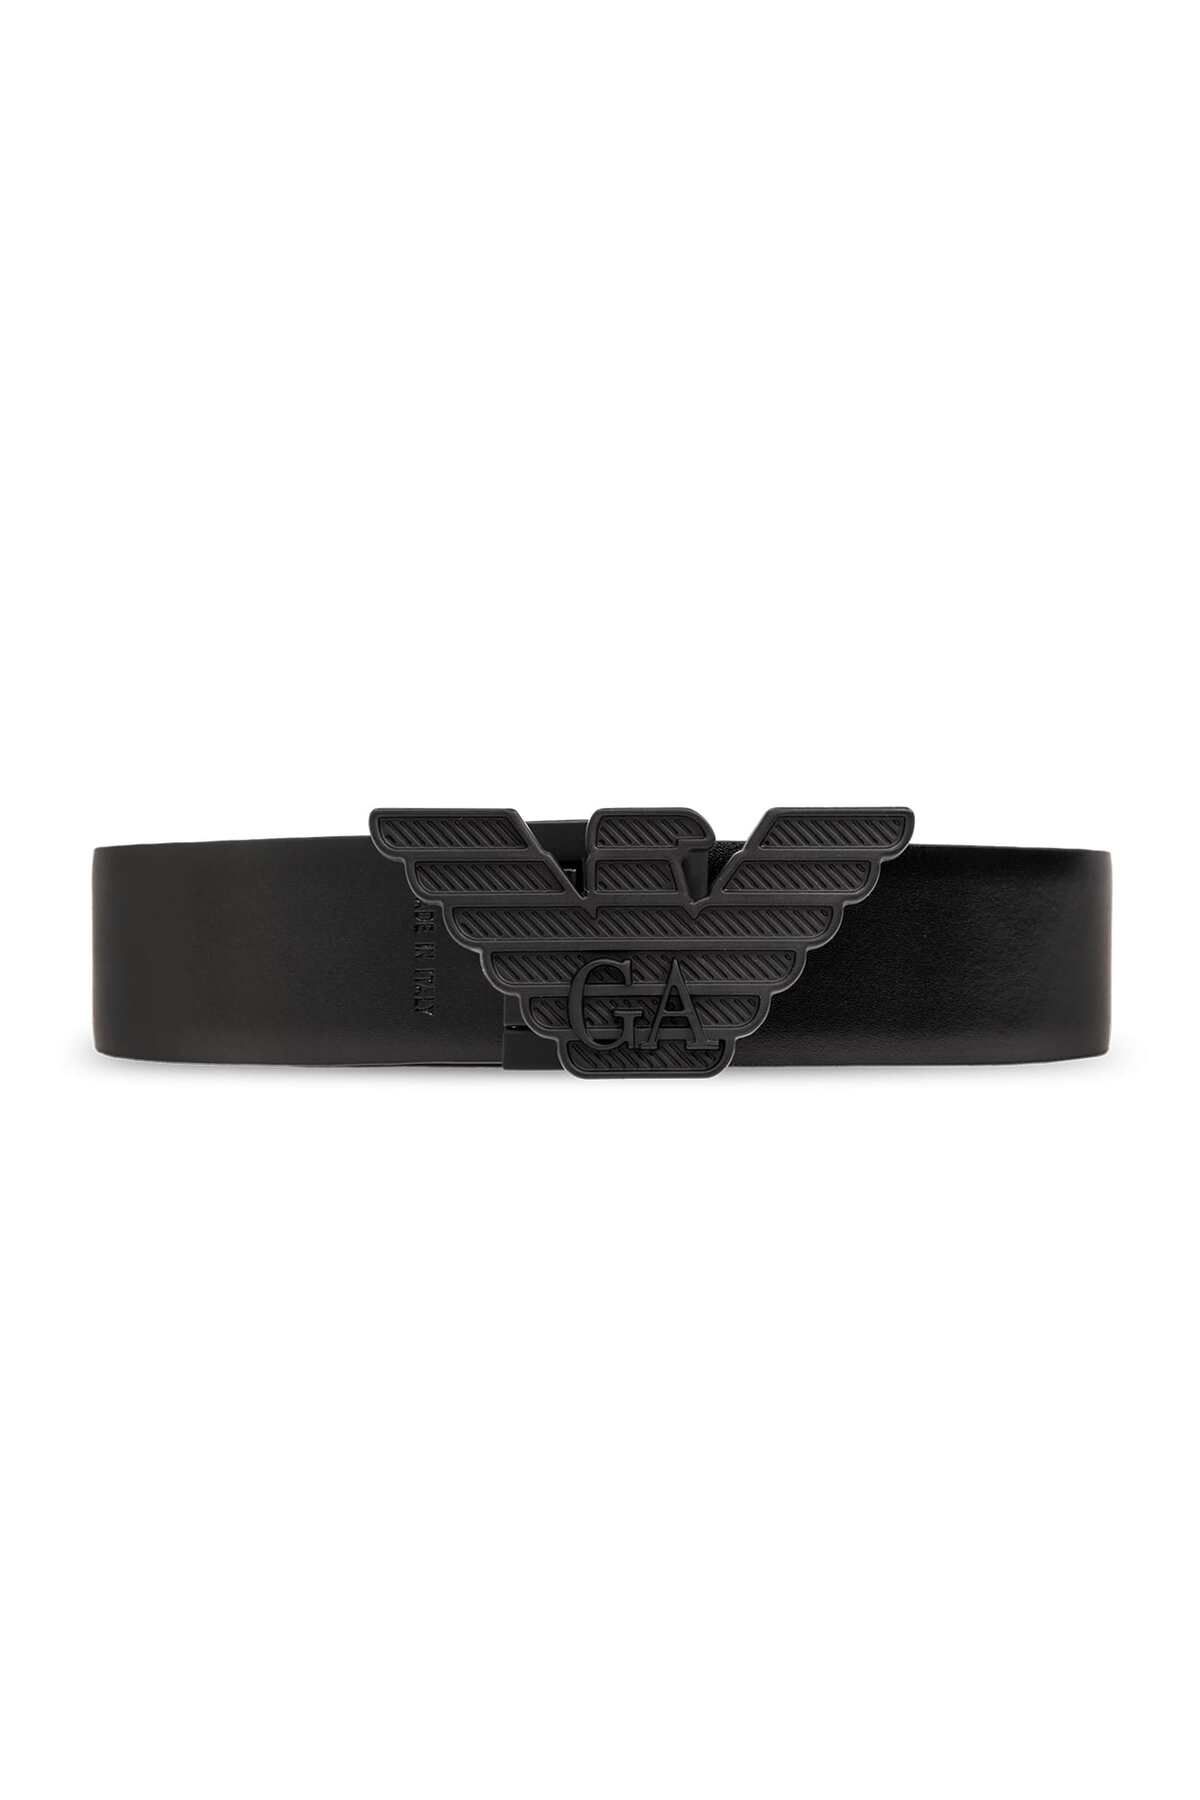 Emporio Armani Erkek Logo Detaylı Metal Tokalı Ayarlanabilir Siyah Kemer Y4S642 YQ48K-81386